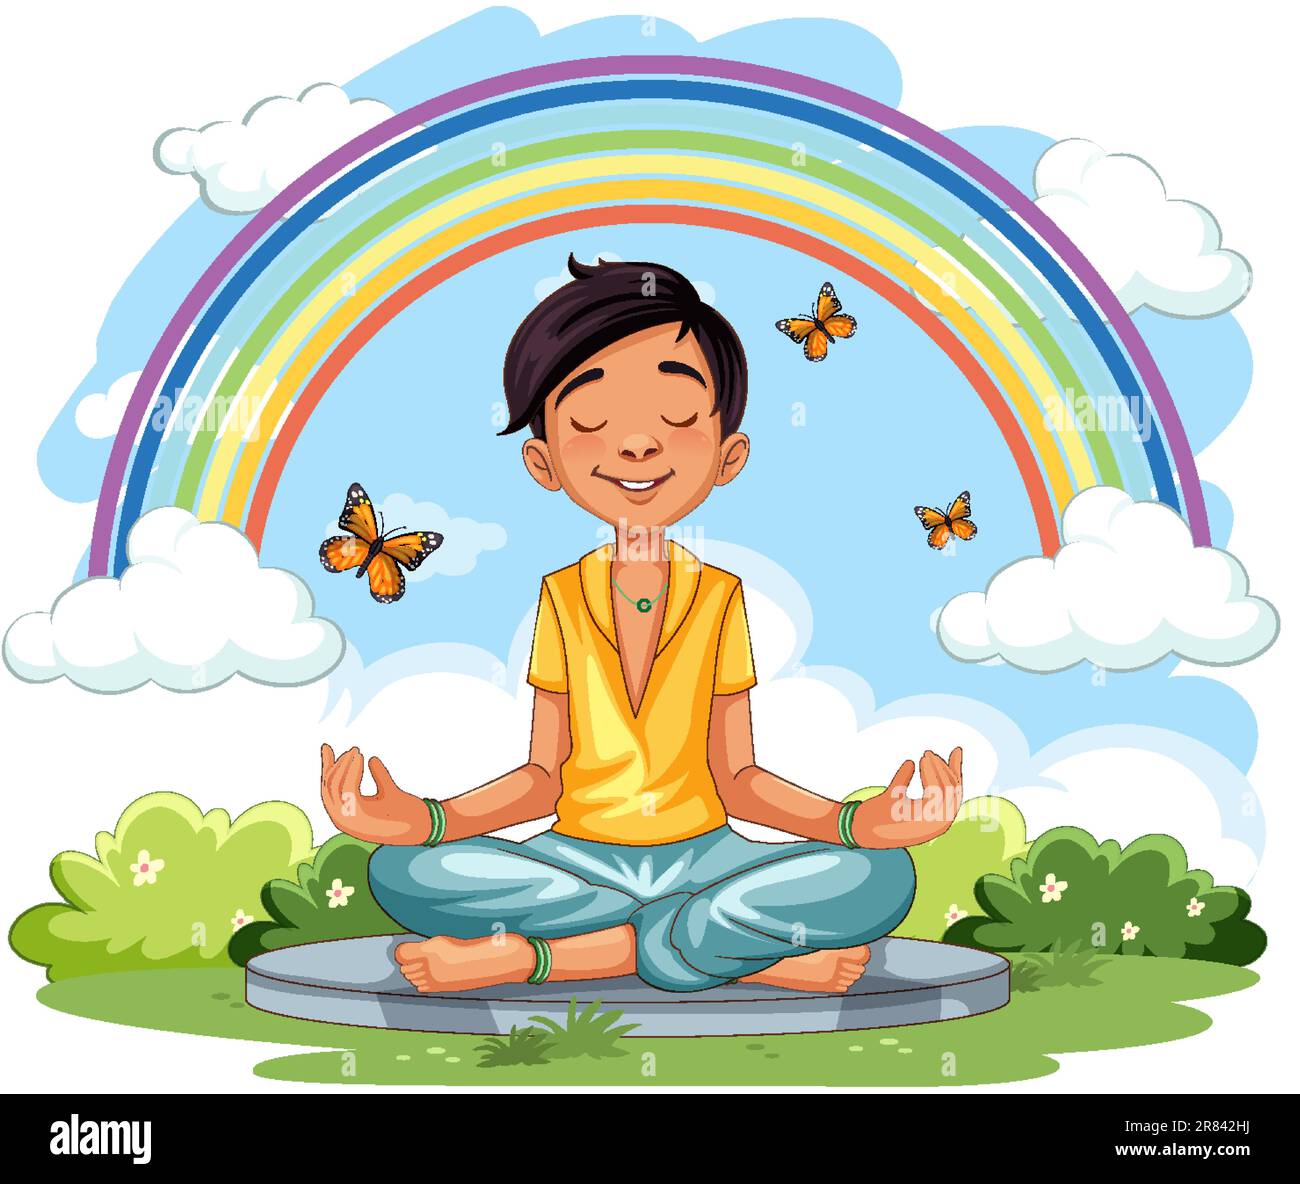 Asian boy meditate at the garden illustration Stock Vector